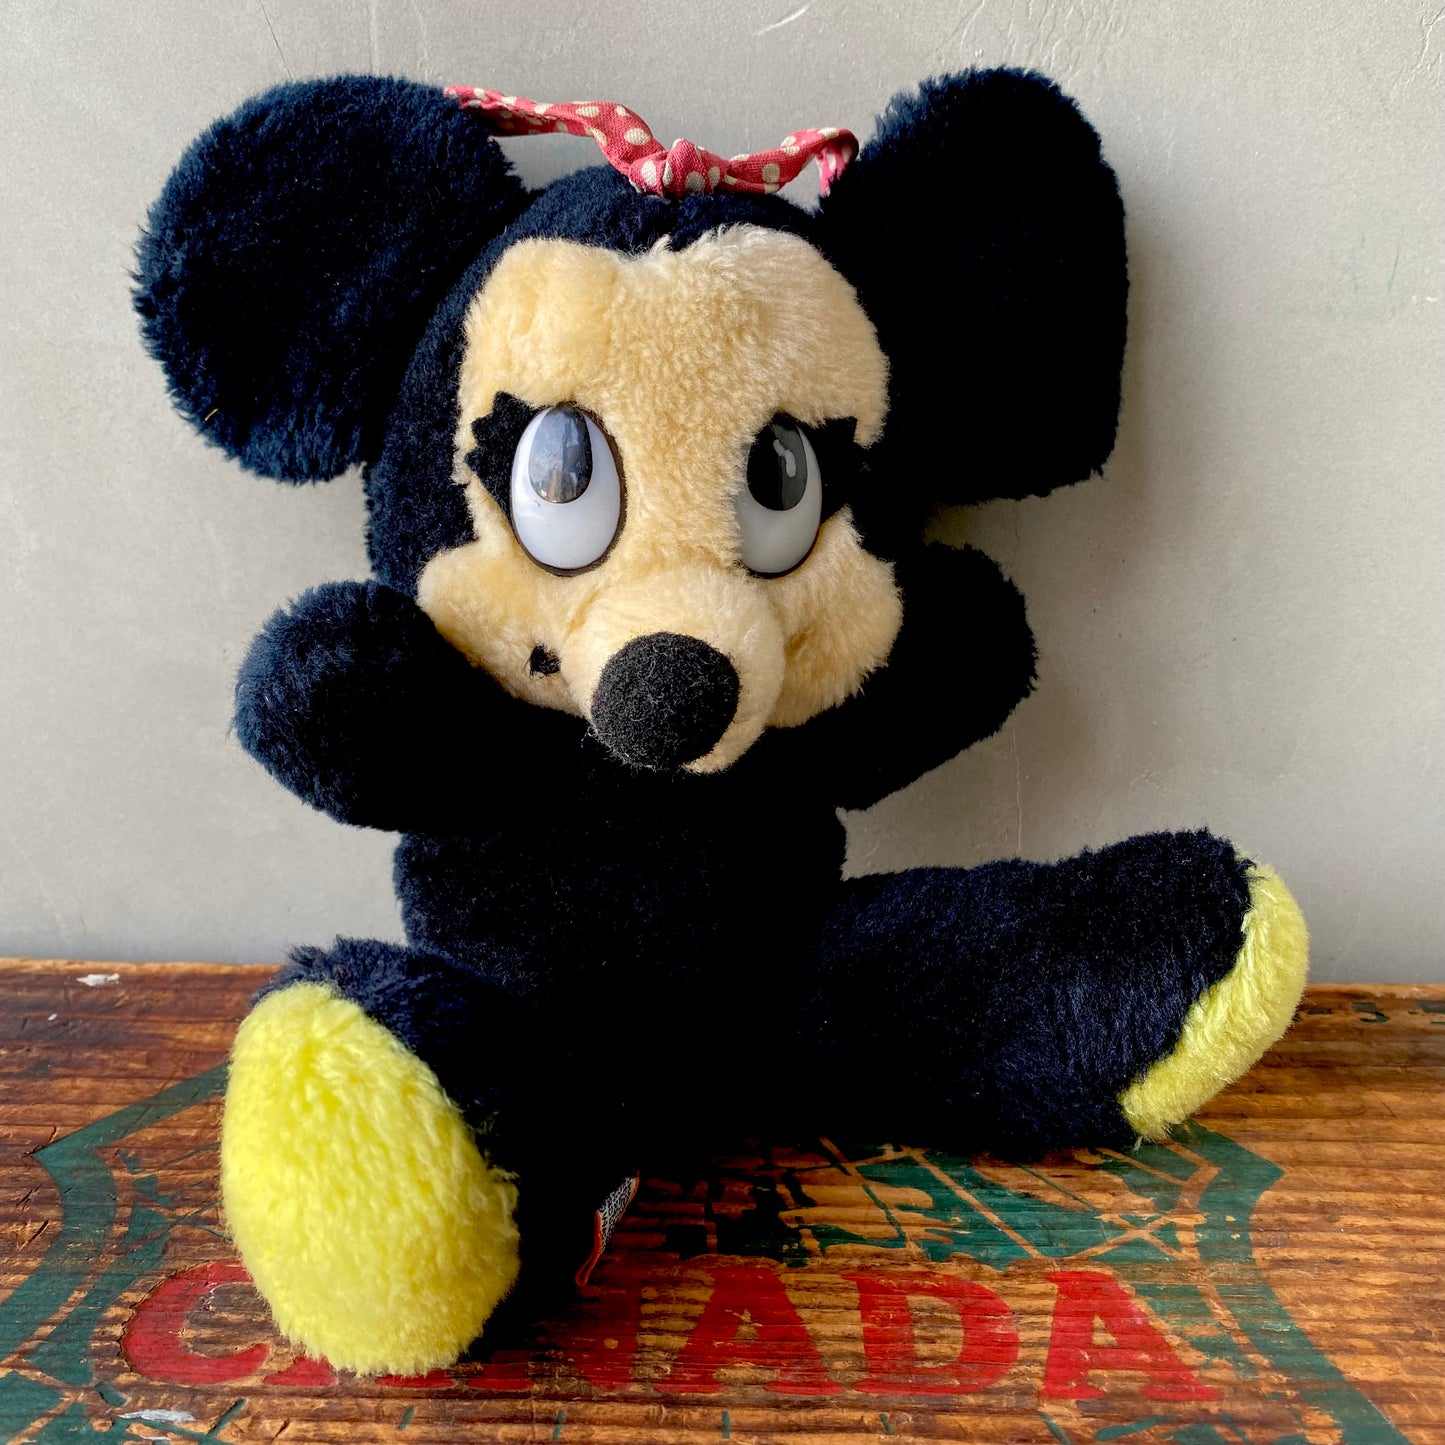 【1970s-1980s vintage】Disney Minnie Mouse ミニー マウス ぬいぐるみ